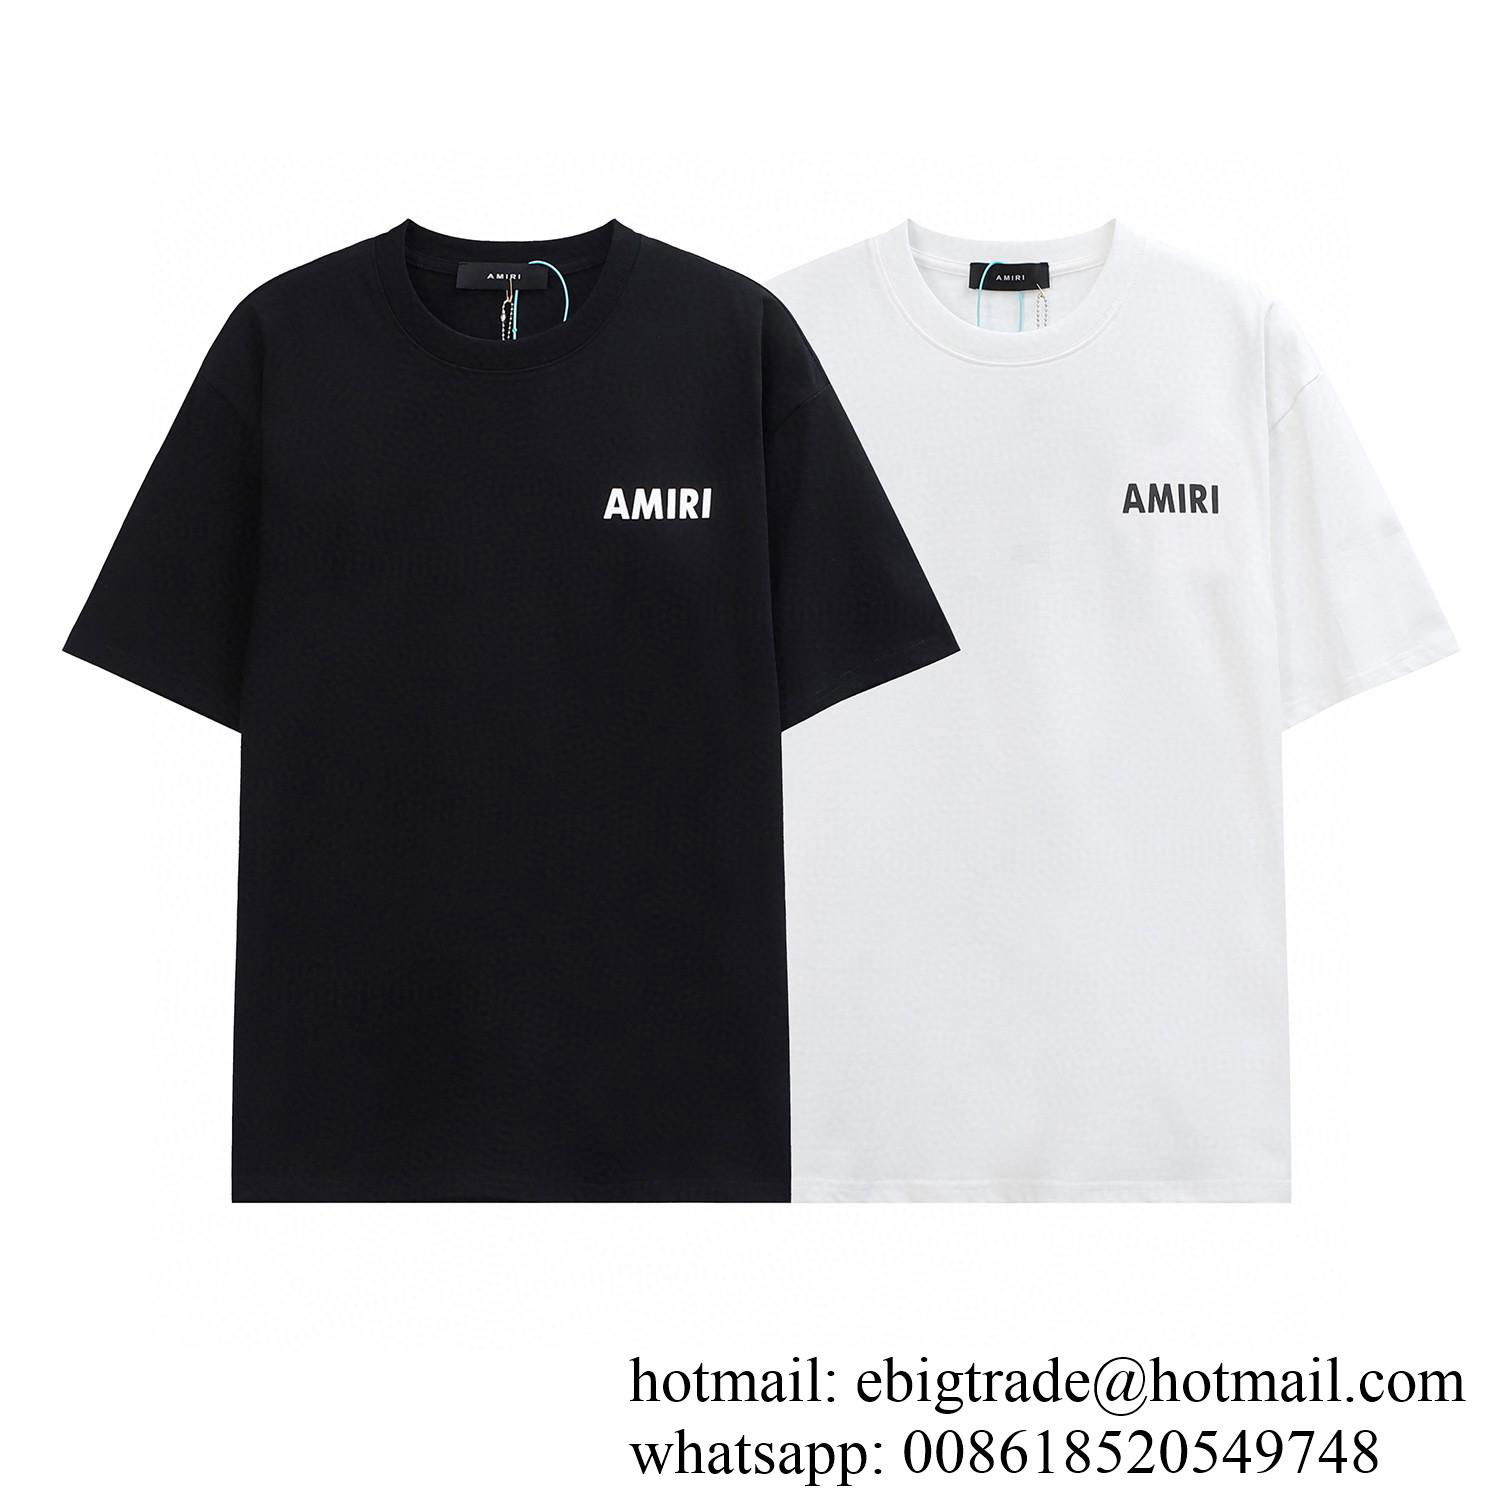 Wholesale Amiri t shirts Cheap Amiri men's t shirts Amiri  tee shirts 2